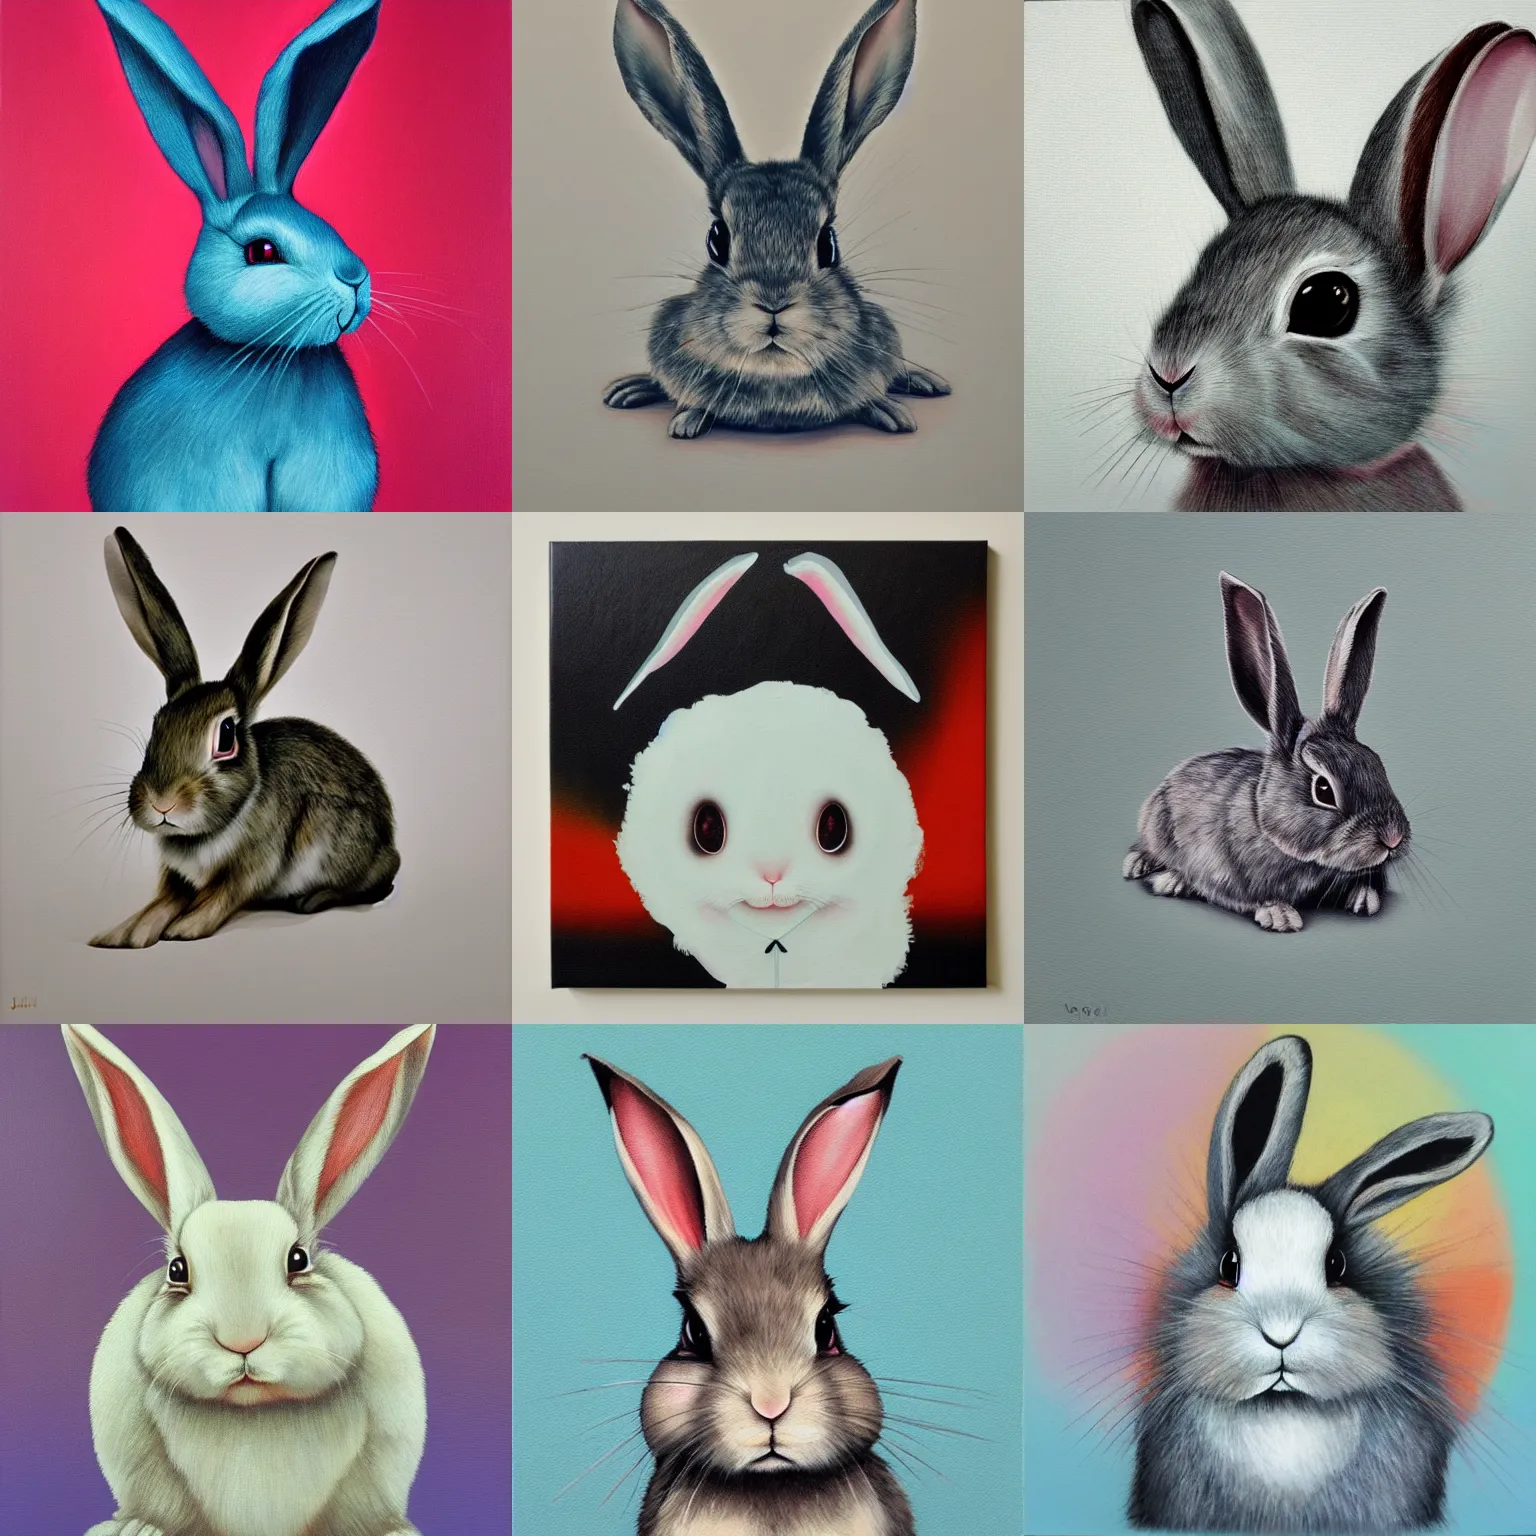 Prompt: rabbit by jessica ng, acryliconcanvas, contemporaryart, cutecreepy